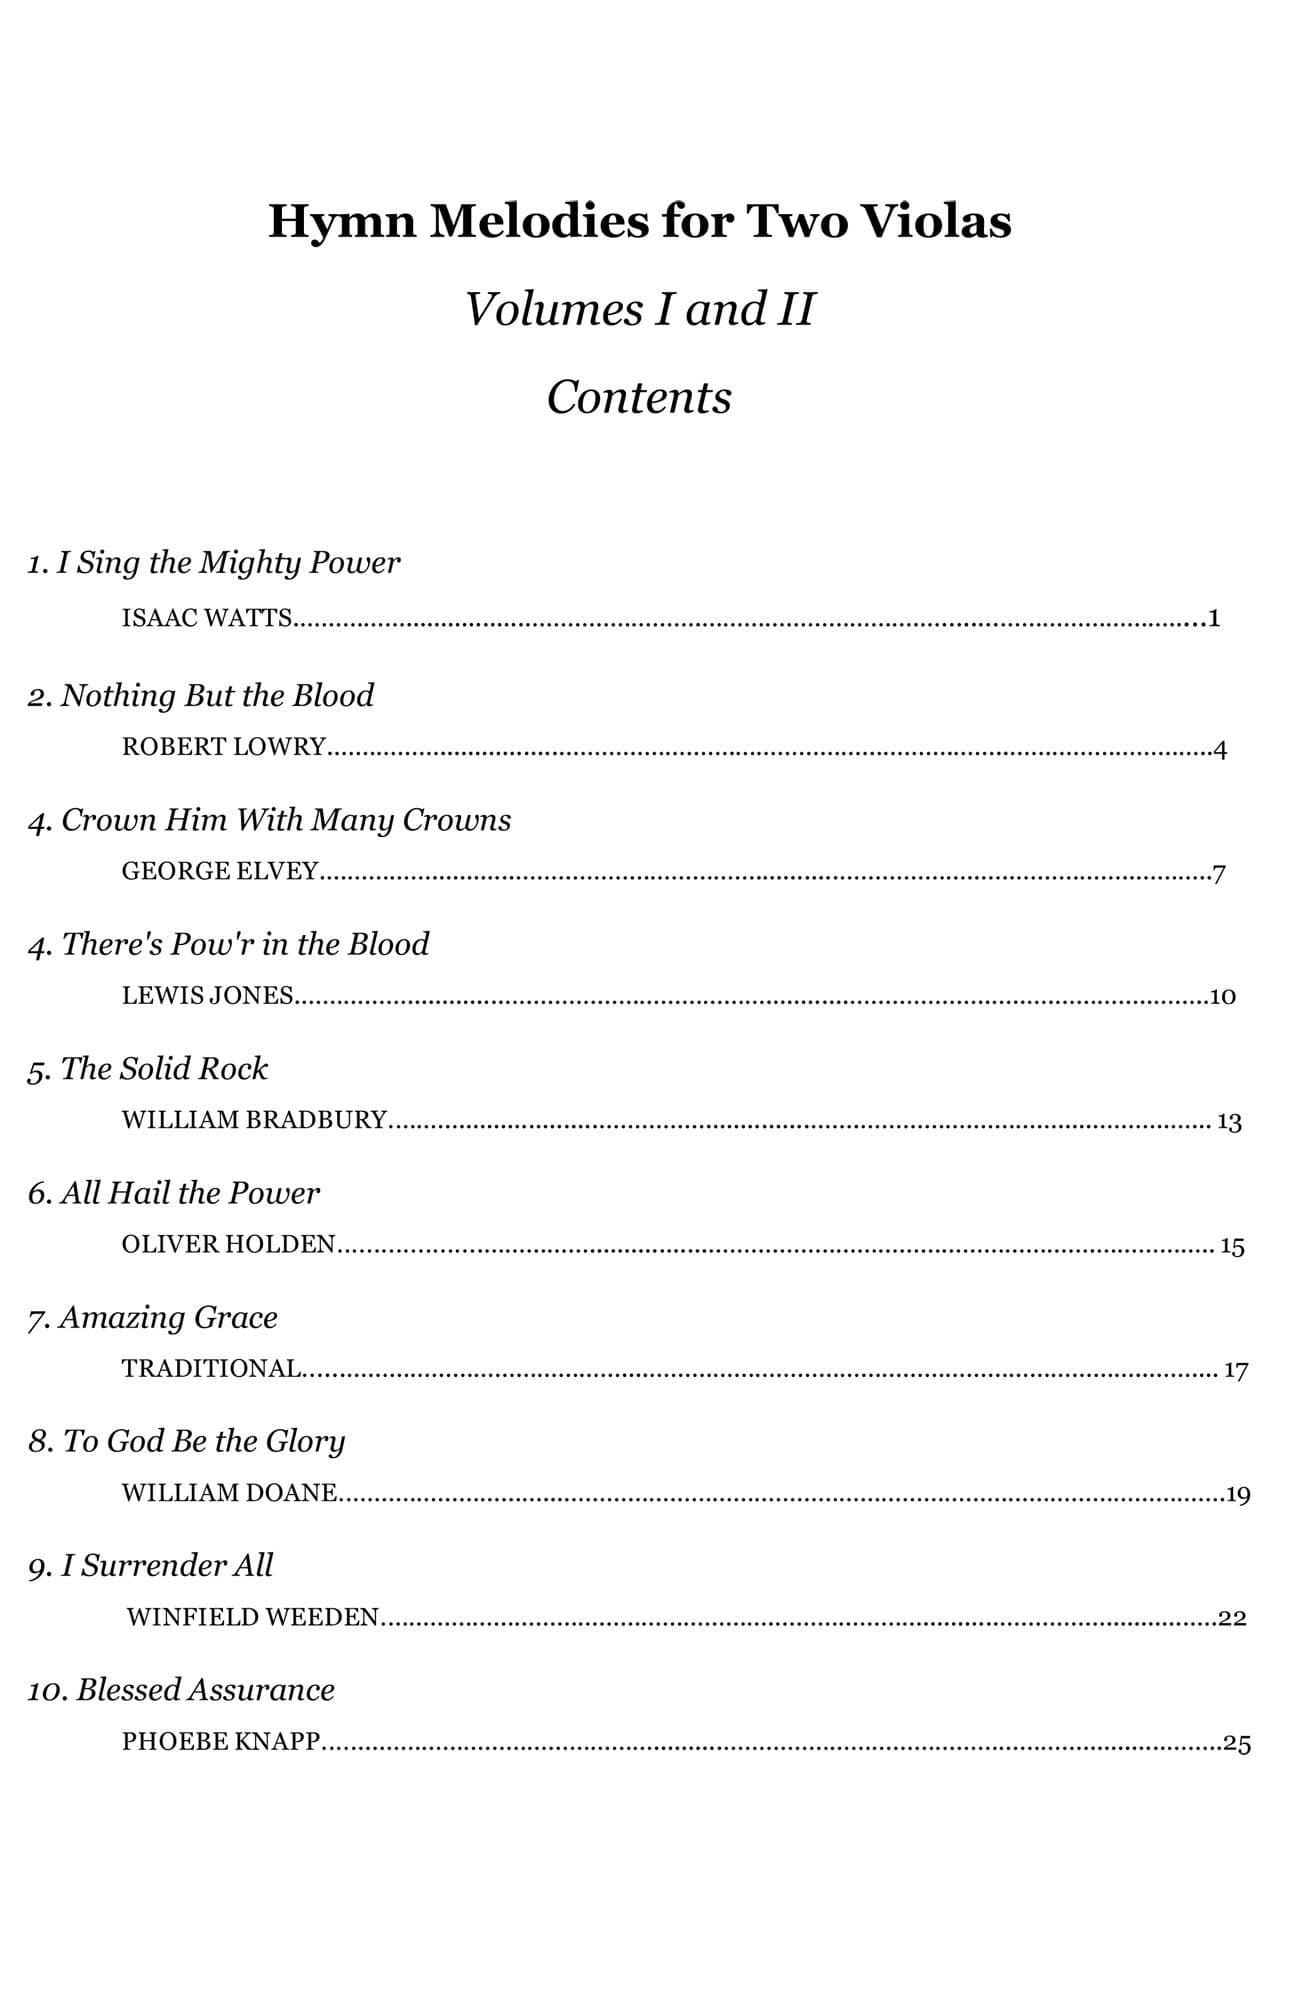 Yasuda, Martha - Hymn Melodies For Two Violas, Volume I - Digital Download